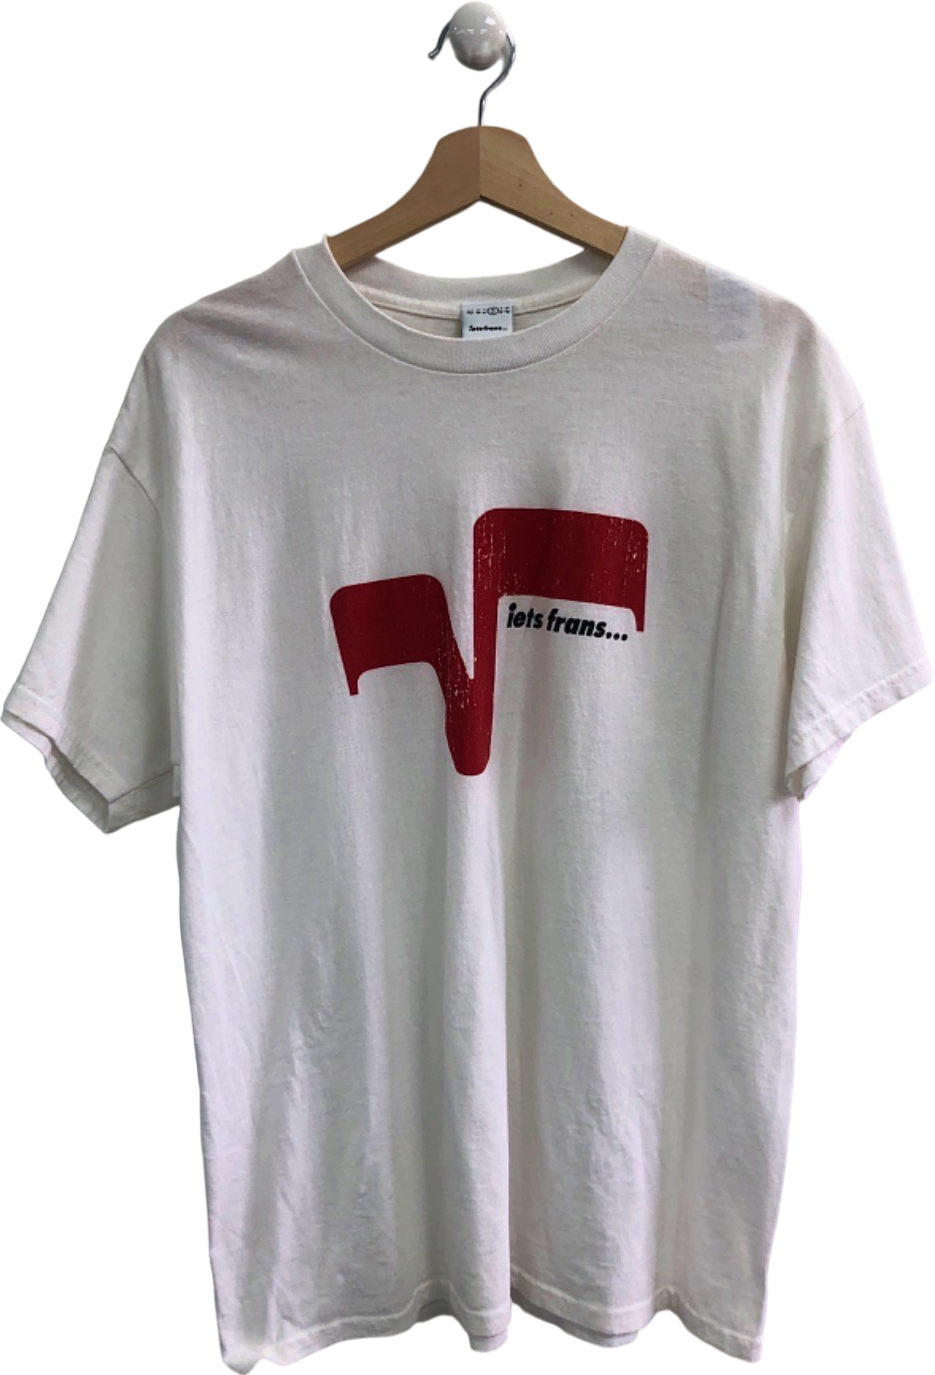 iets frans White Graphic Print T-Shirt UK M